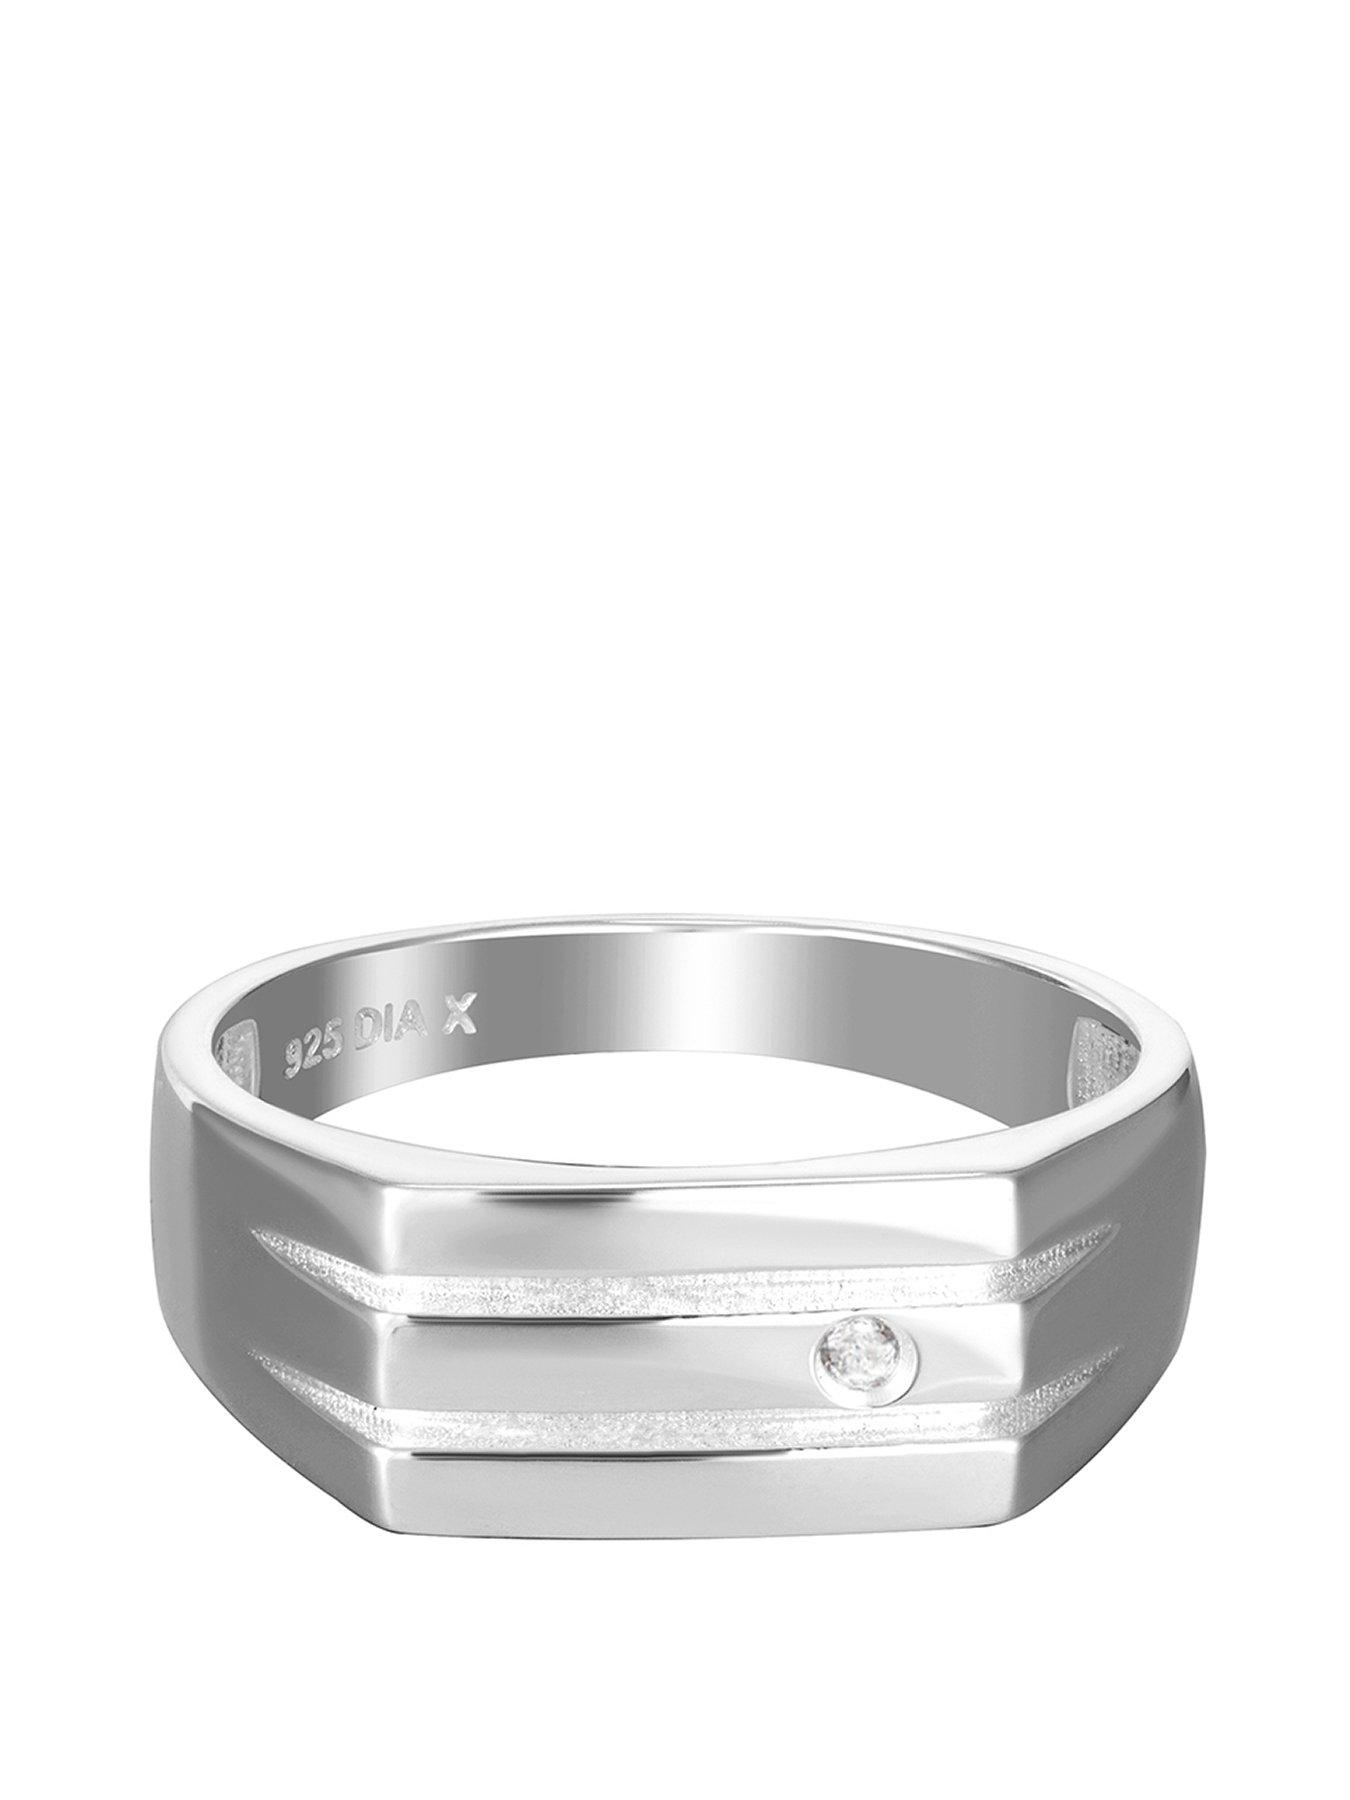  Sterling Silver Men's Square Signet Ring